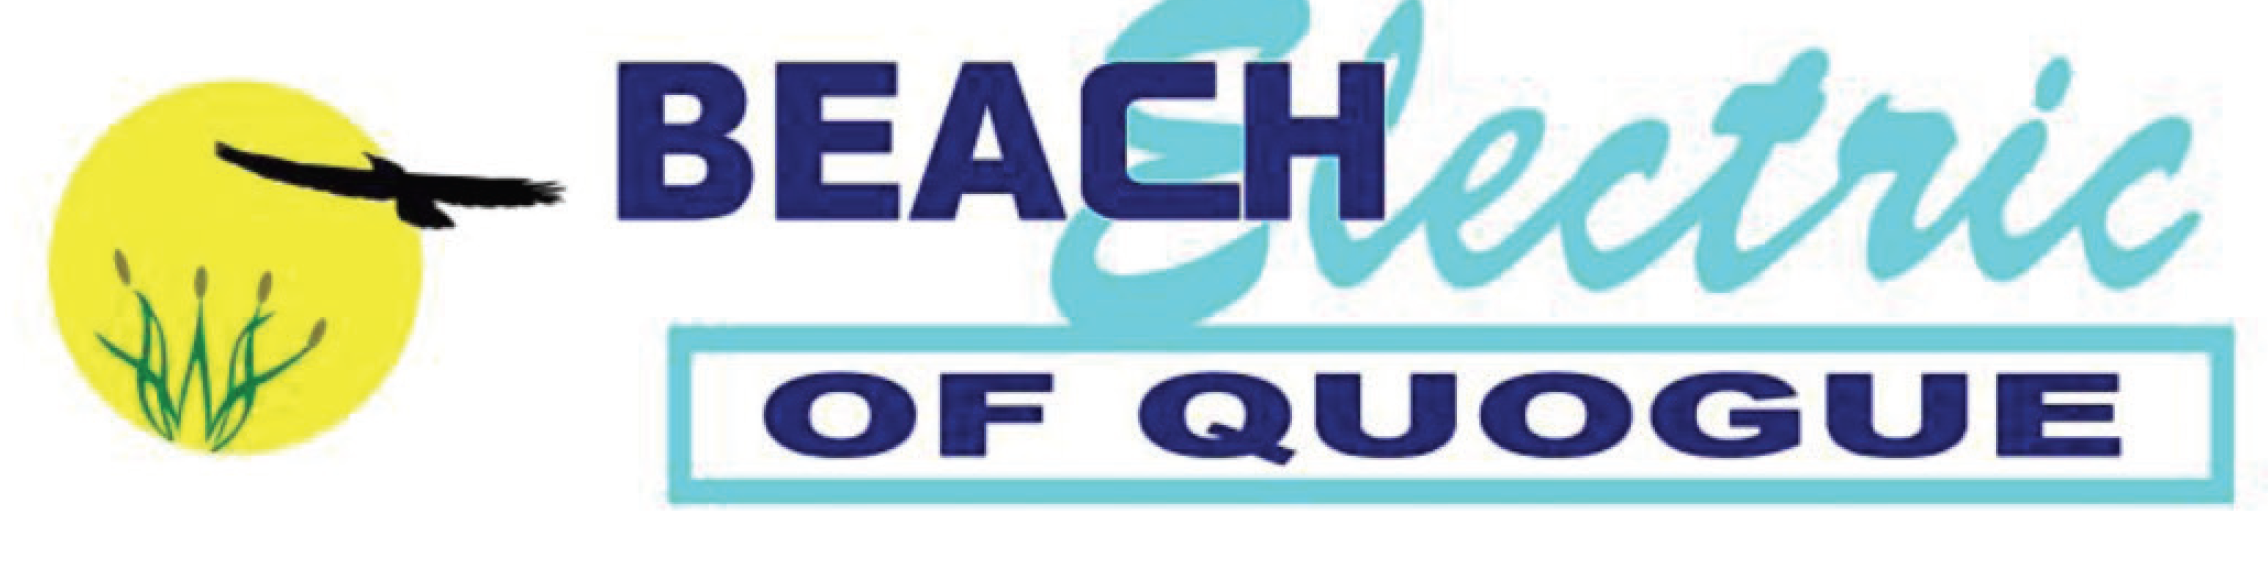 Beach Electric logo